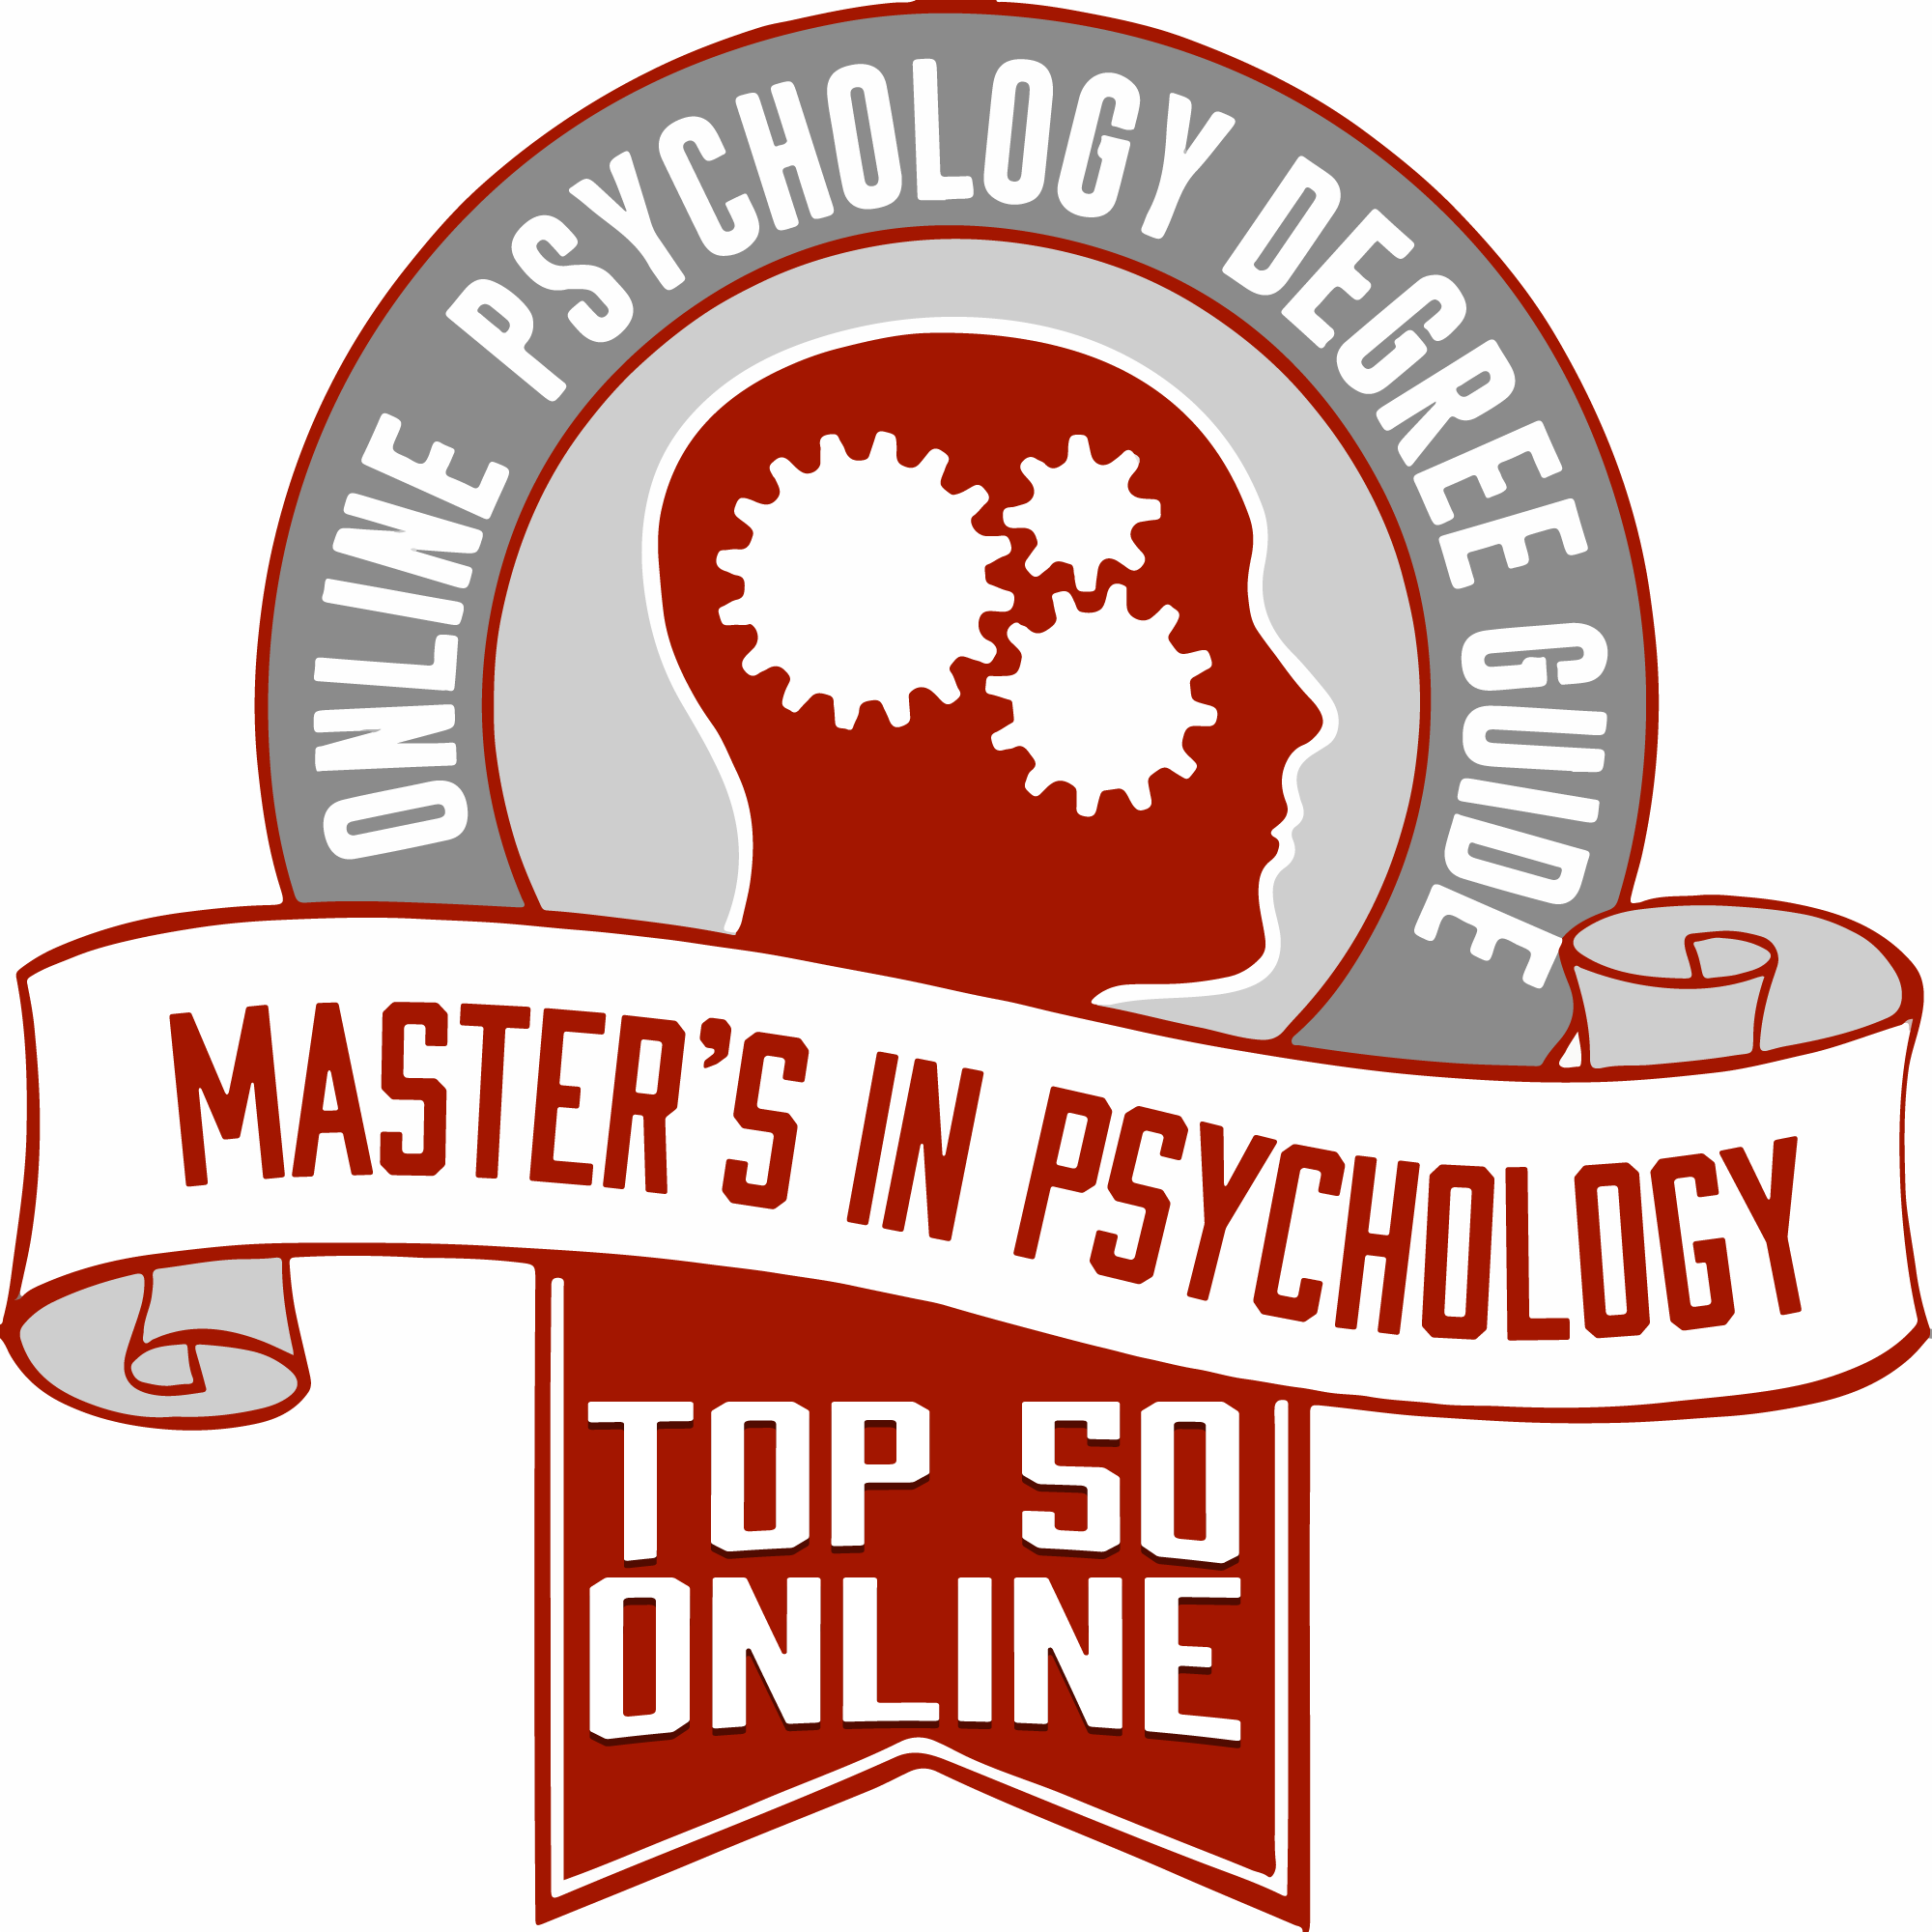 best phd psychology programs online